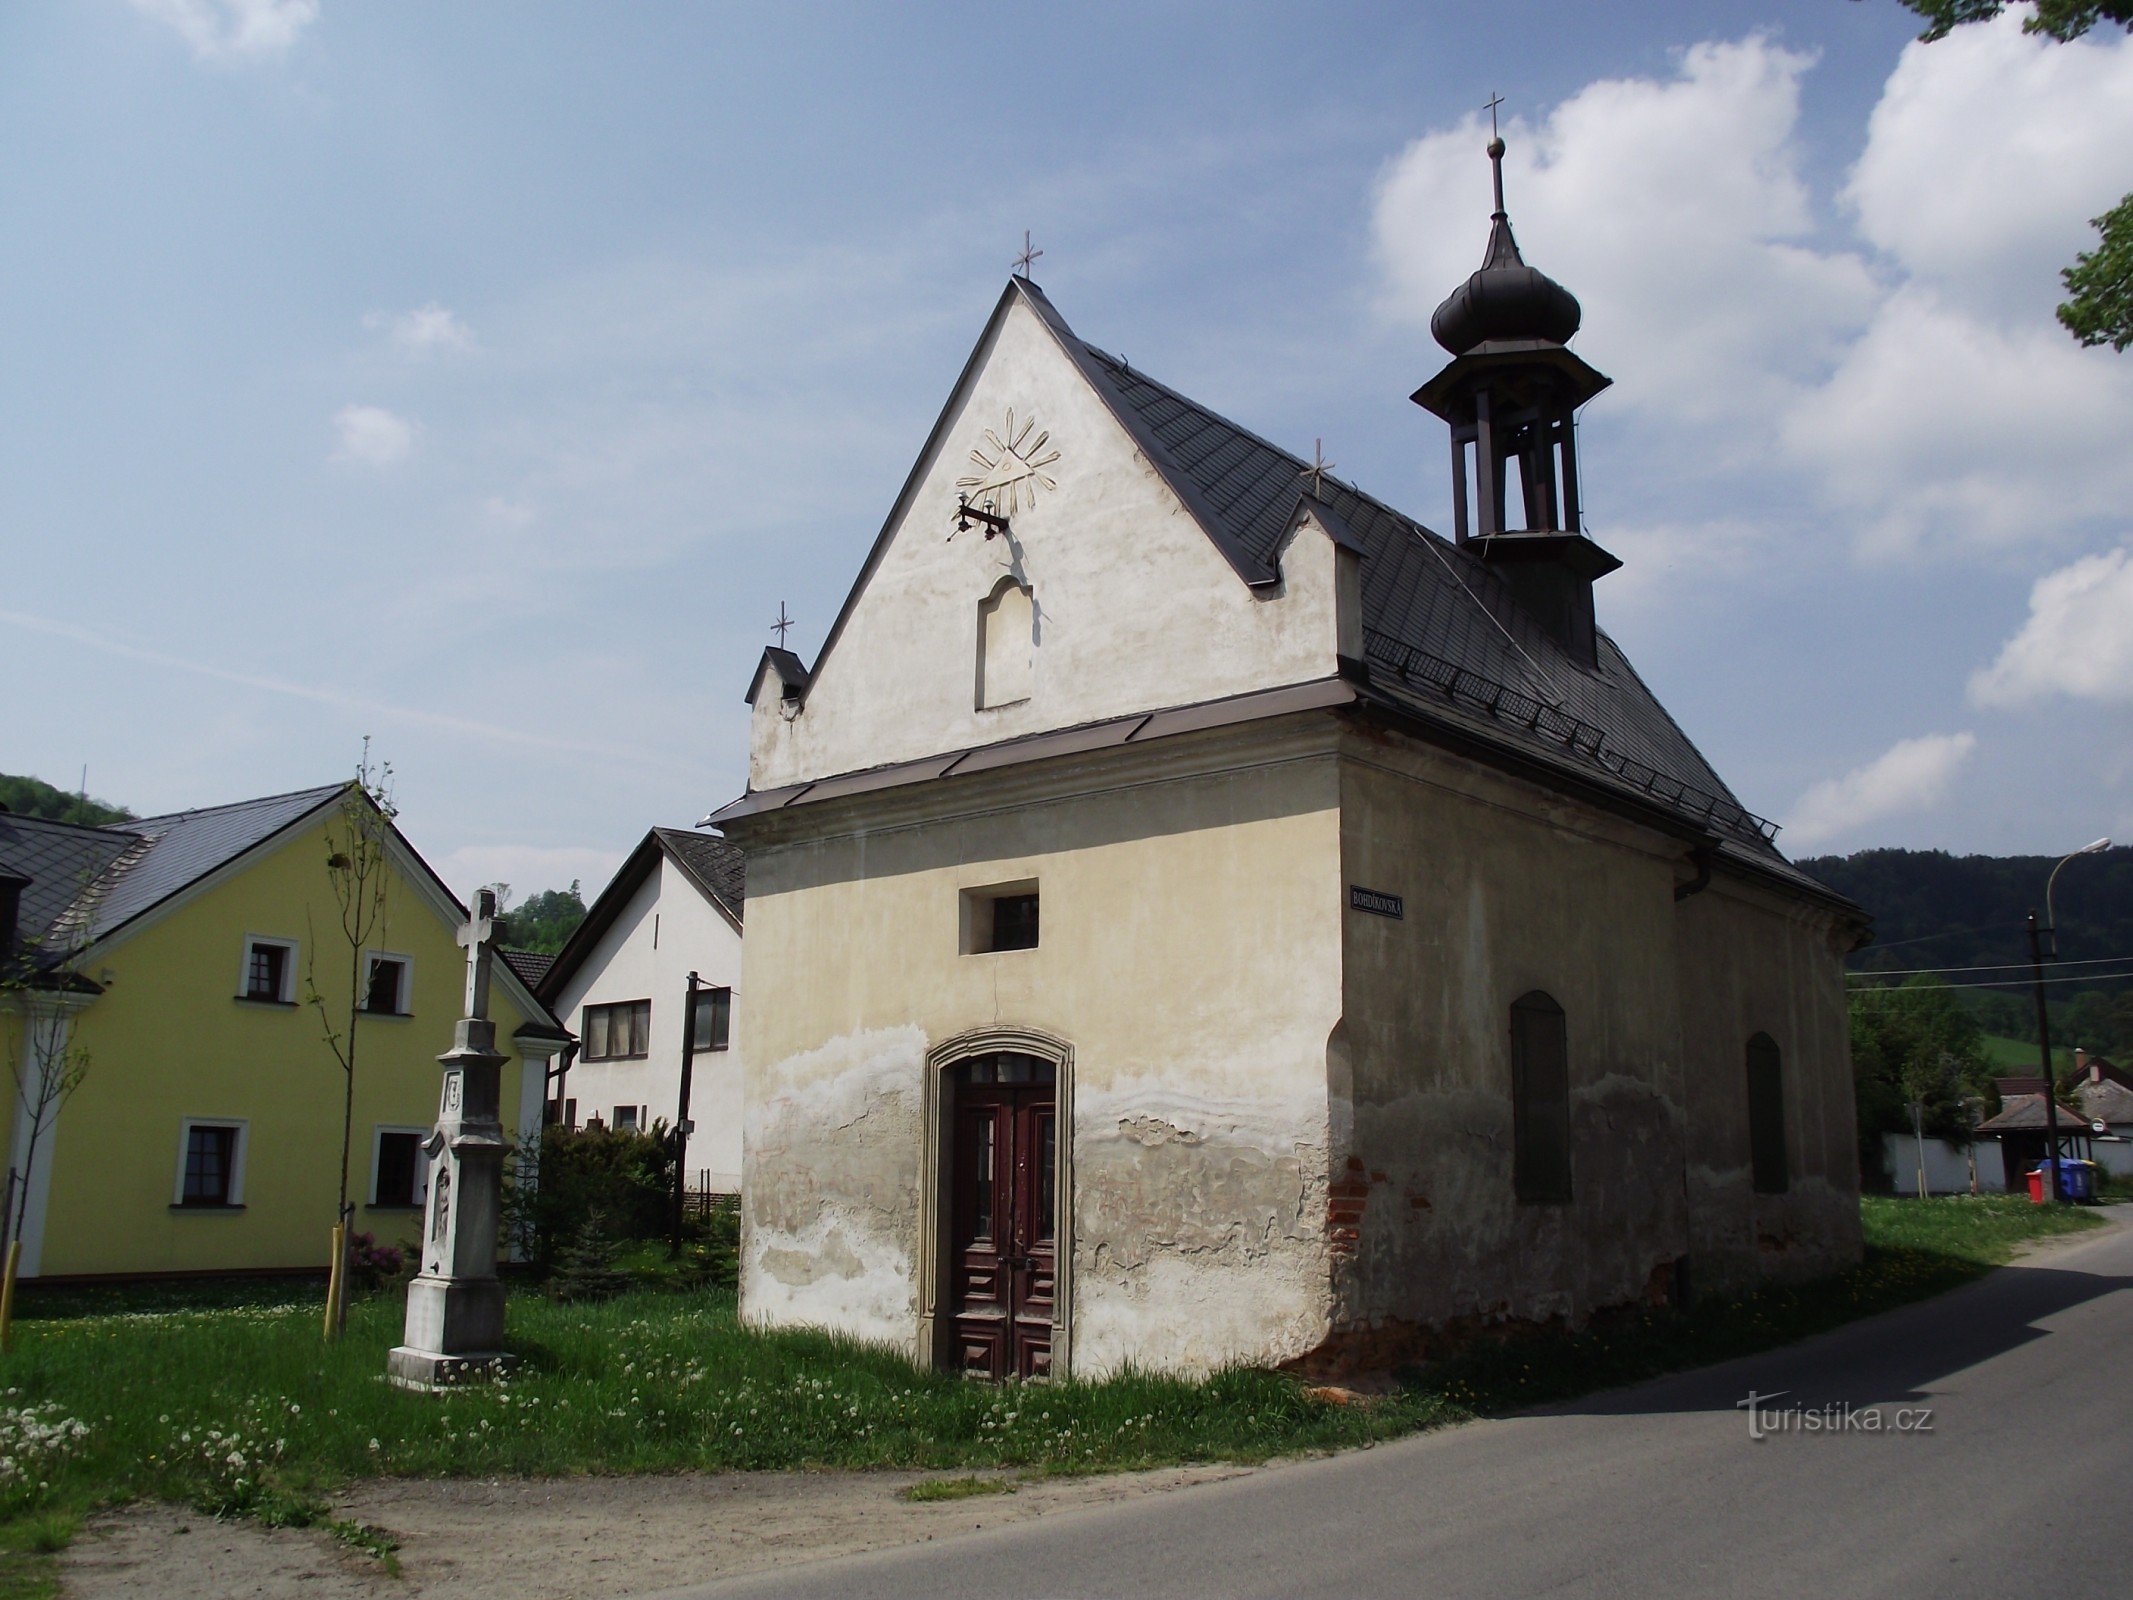 Horní Temenice – chapel of St. Anne